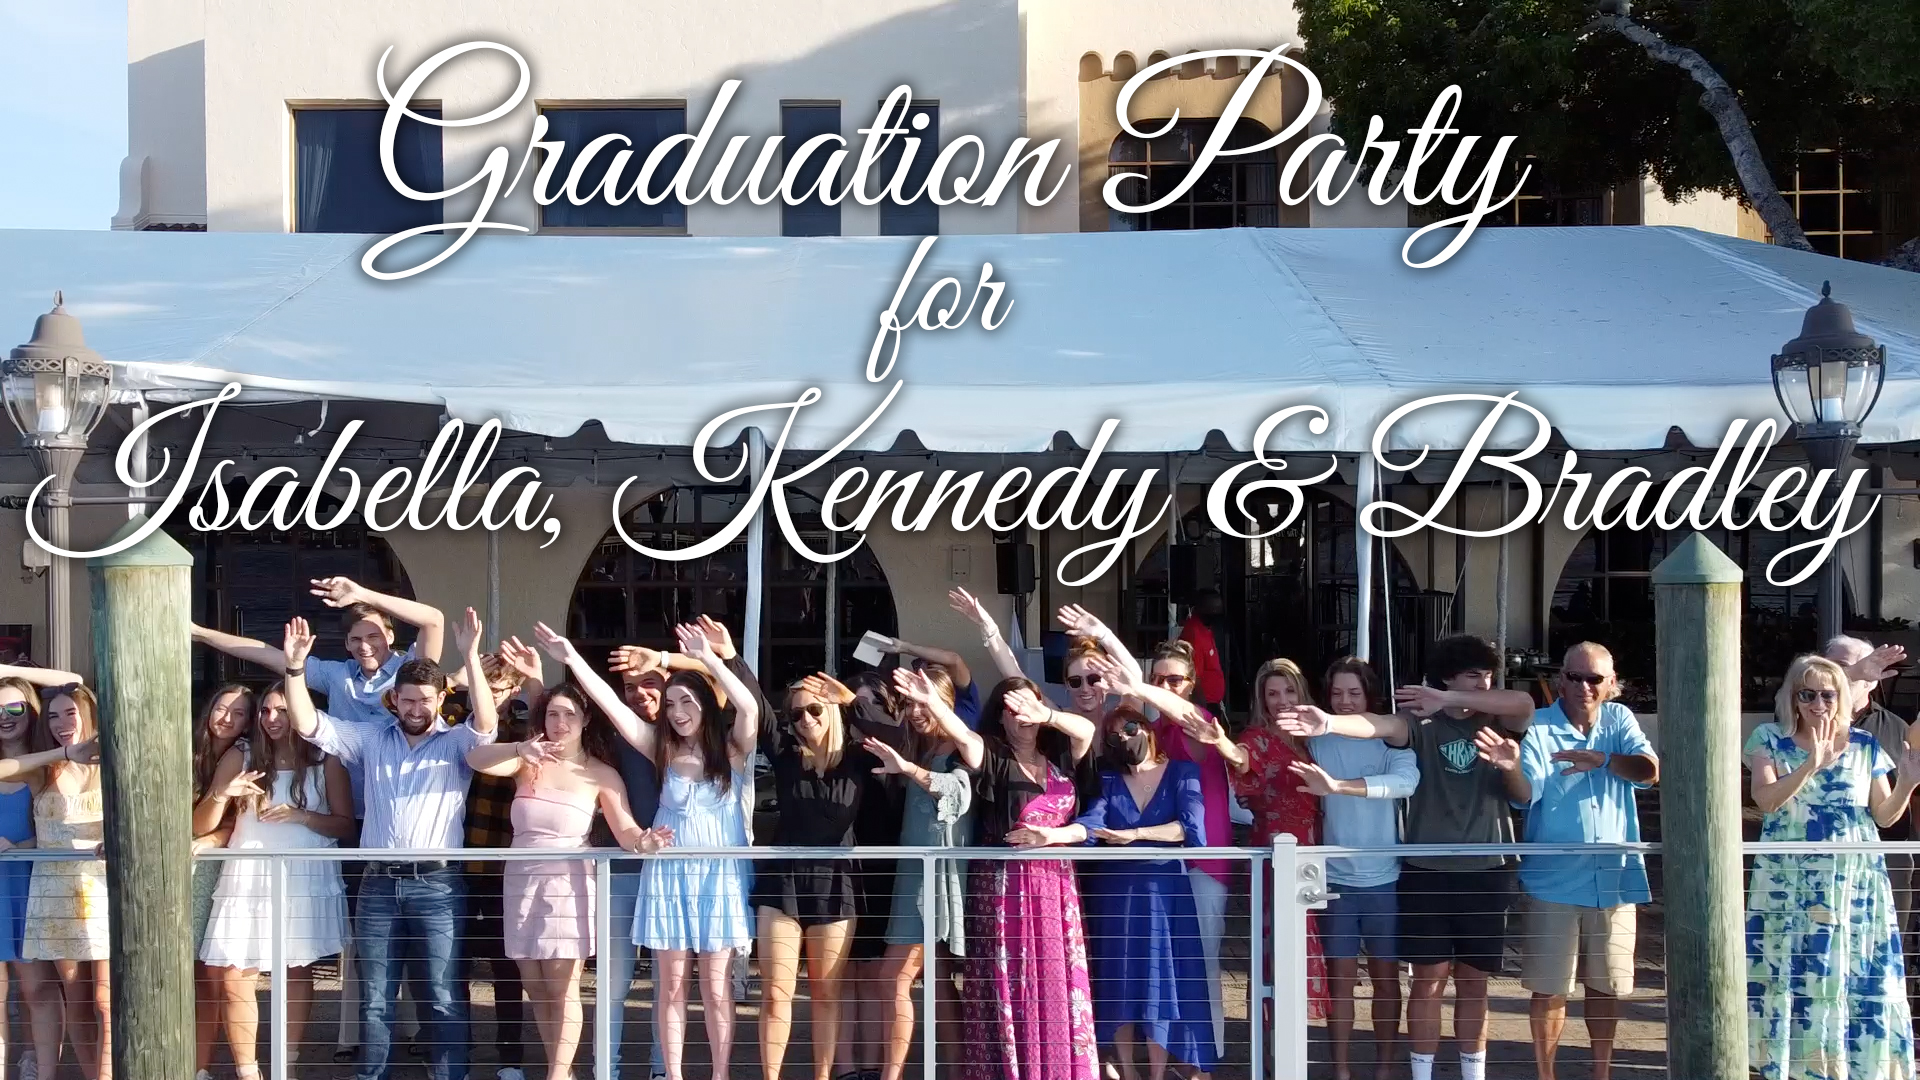 Graduation Party for Isabella, Kennedy & Bradley